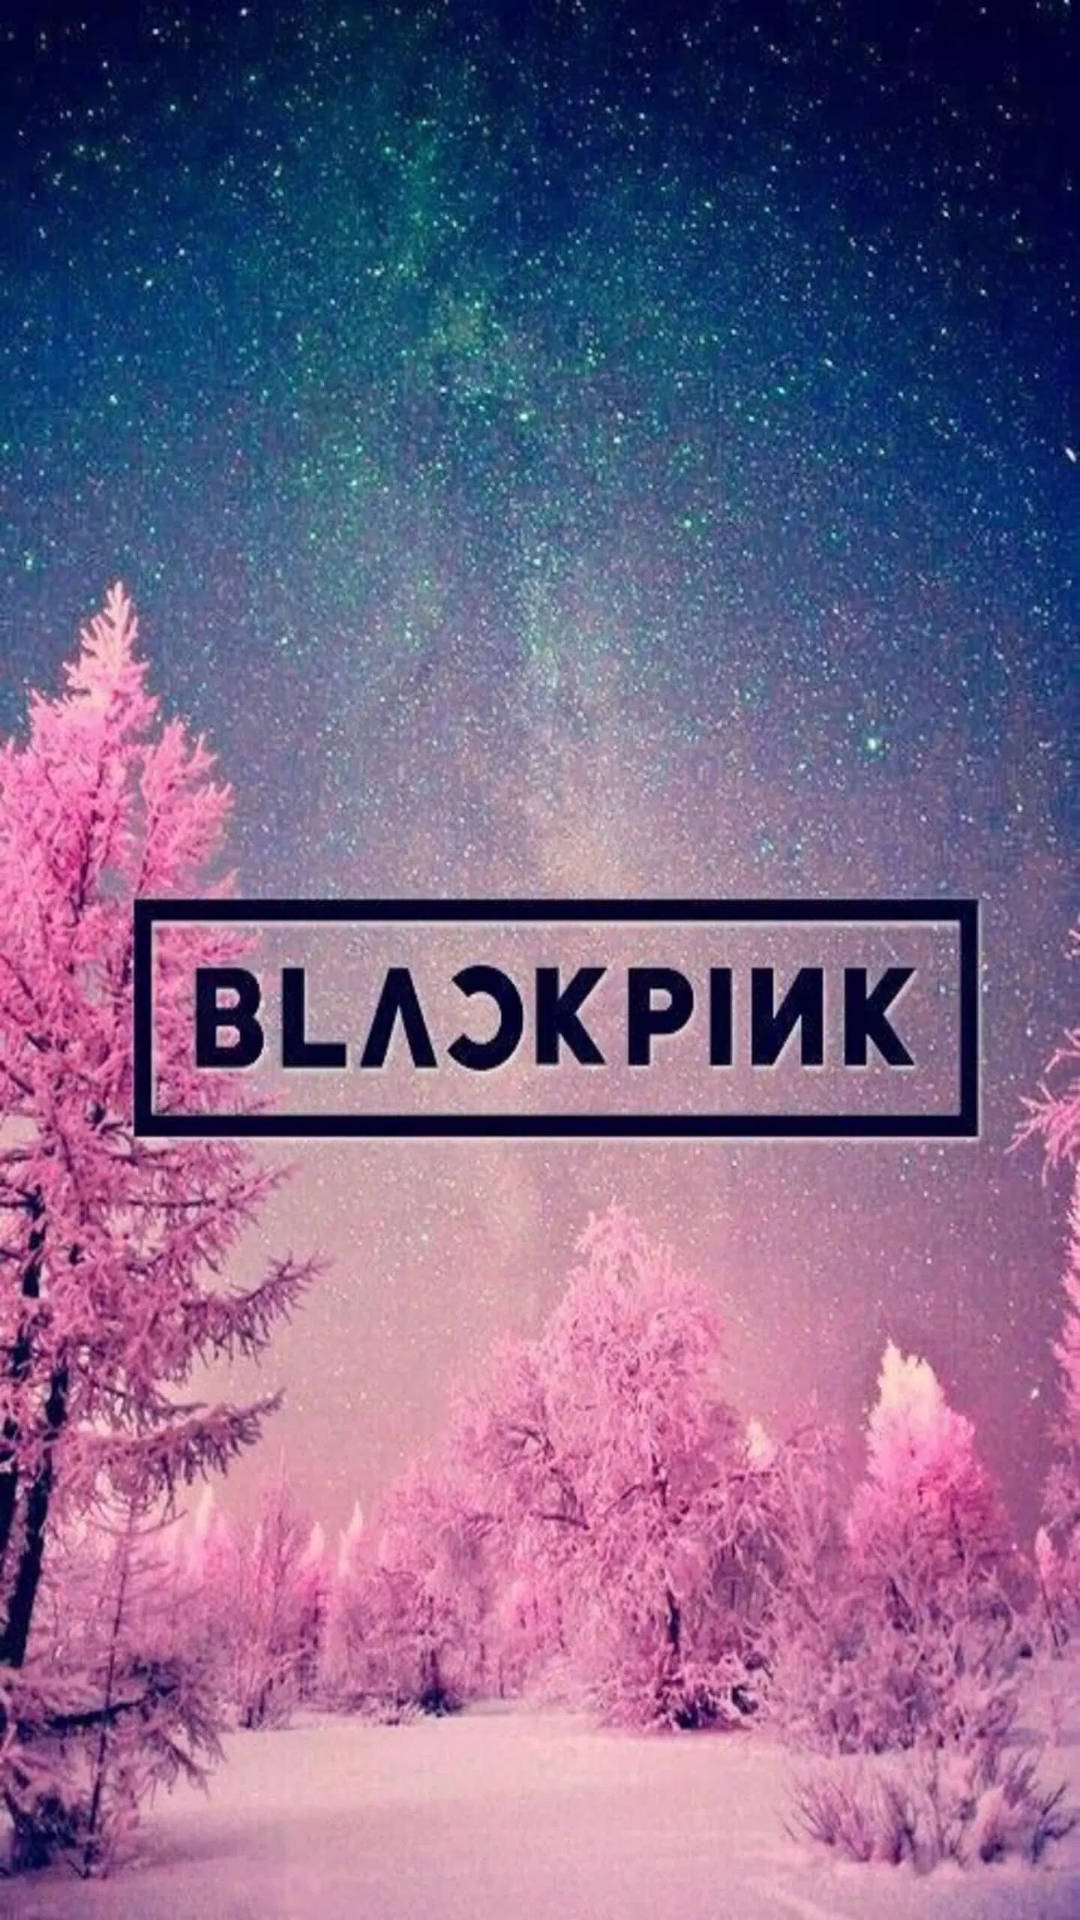 Blackpink Logo Over Pink Snowy Forest Background